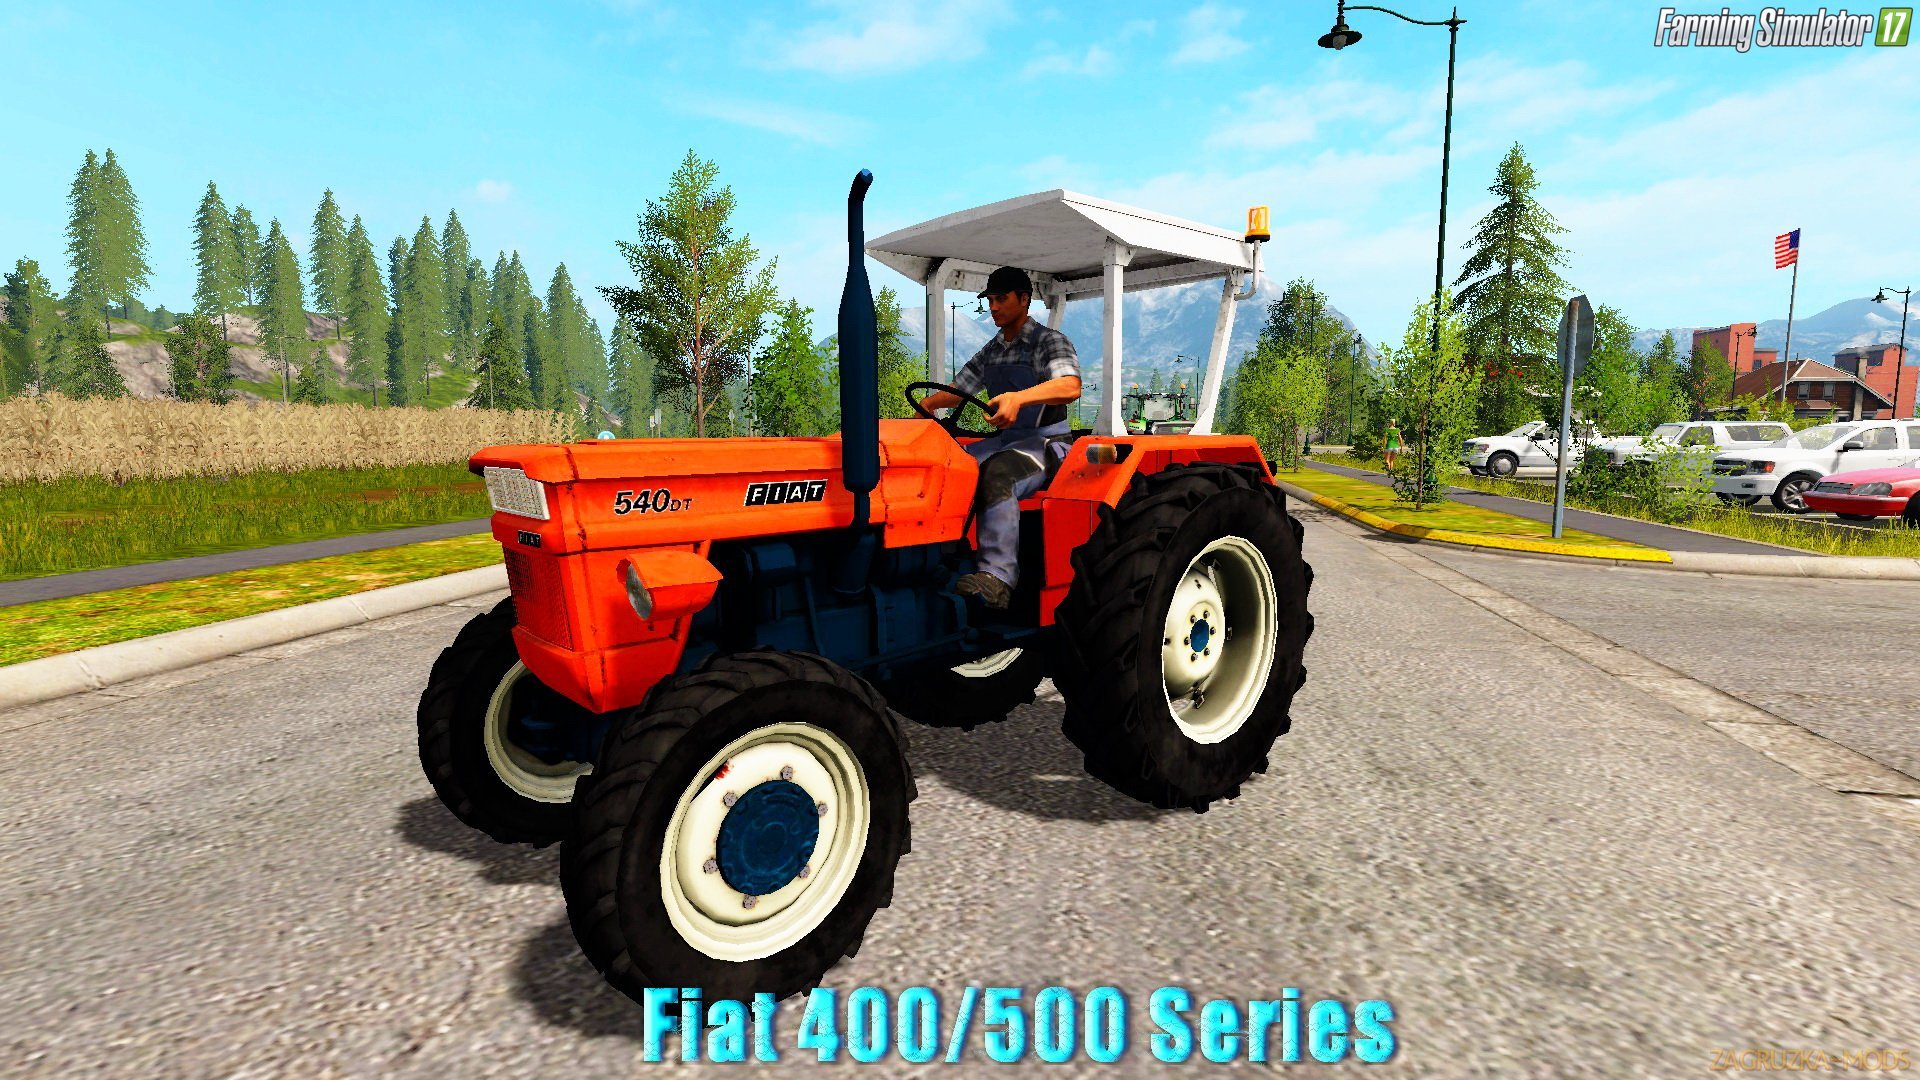 Tractor Fiat 400/500 Series v1.0 for FS 17 » Zagruzka-Mods.com ...